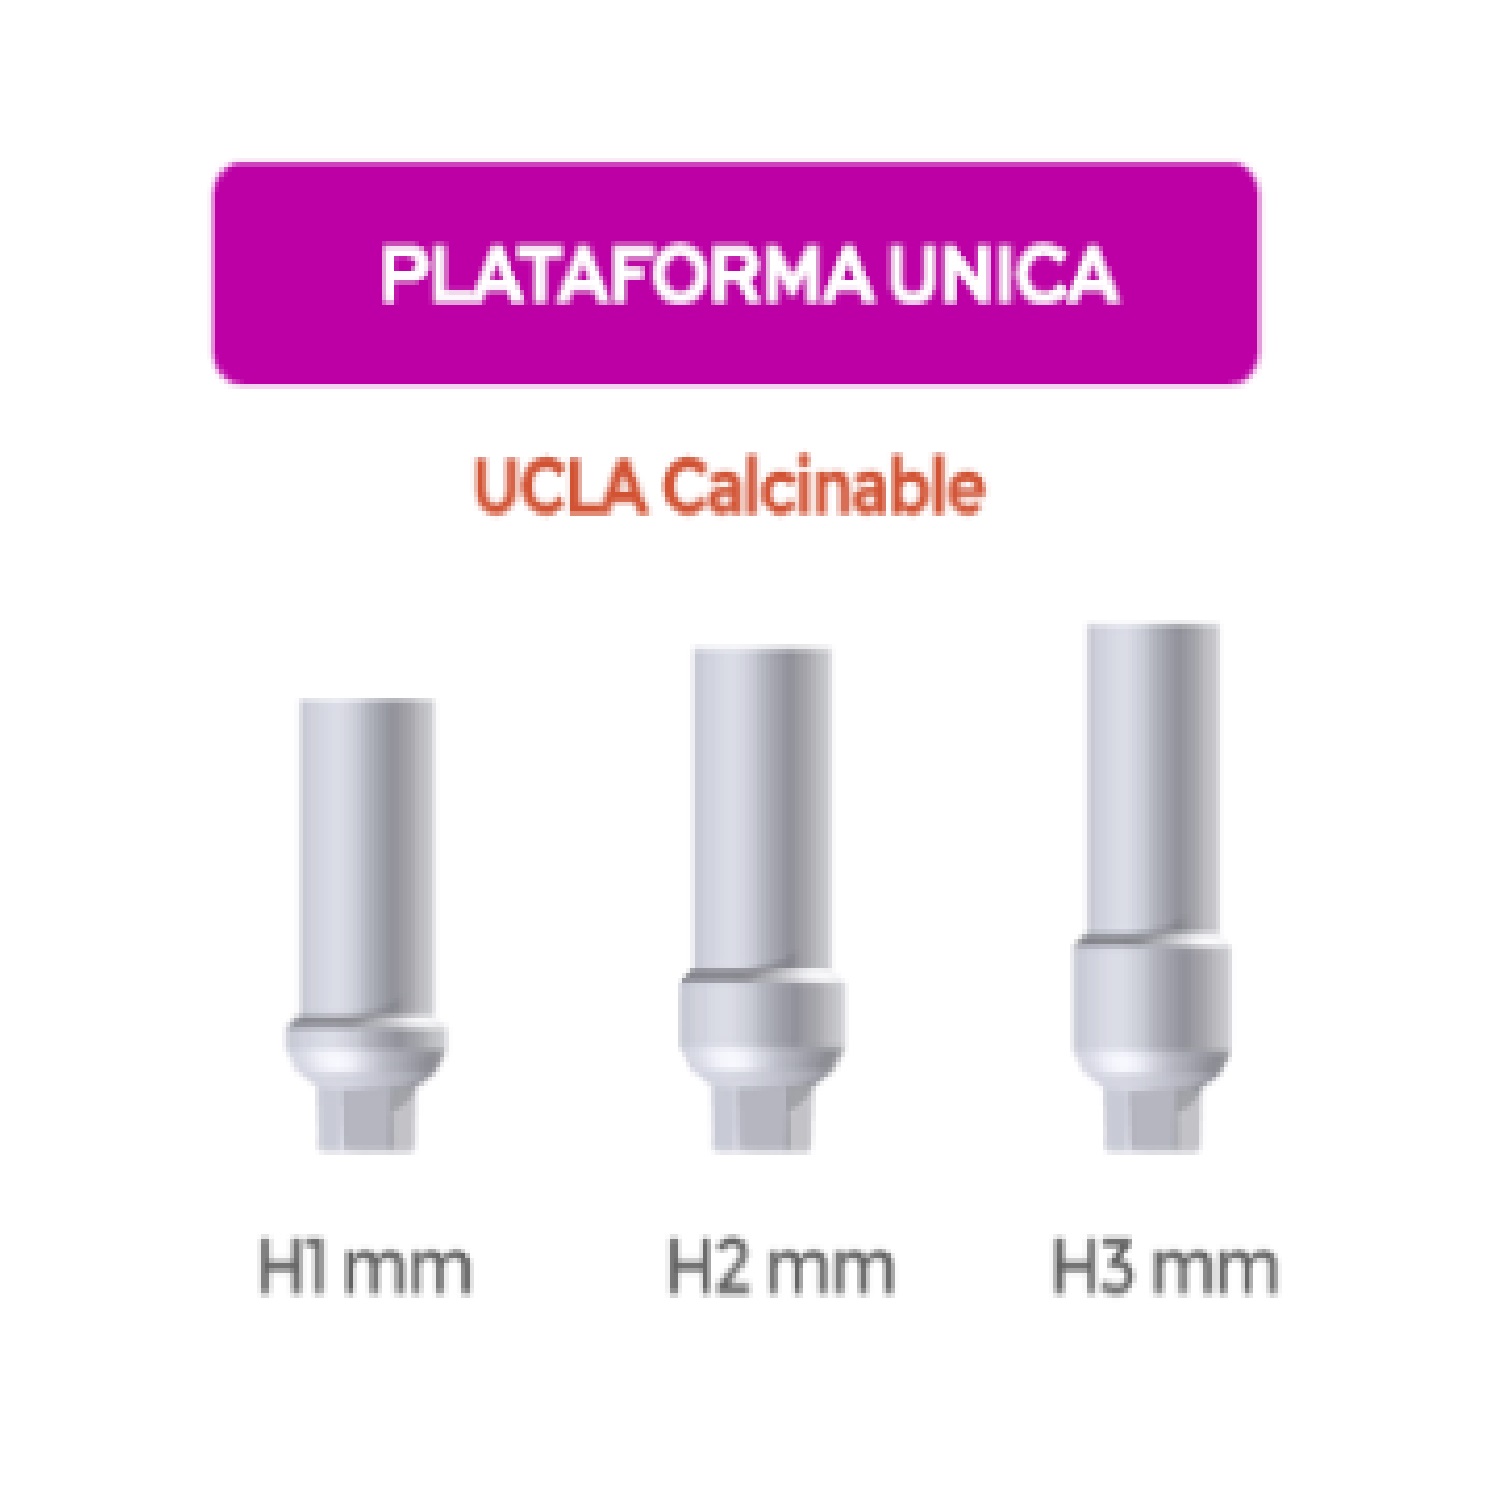 PLATAF_UNICA_UCLA